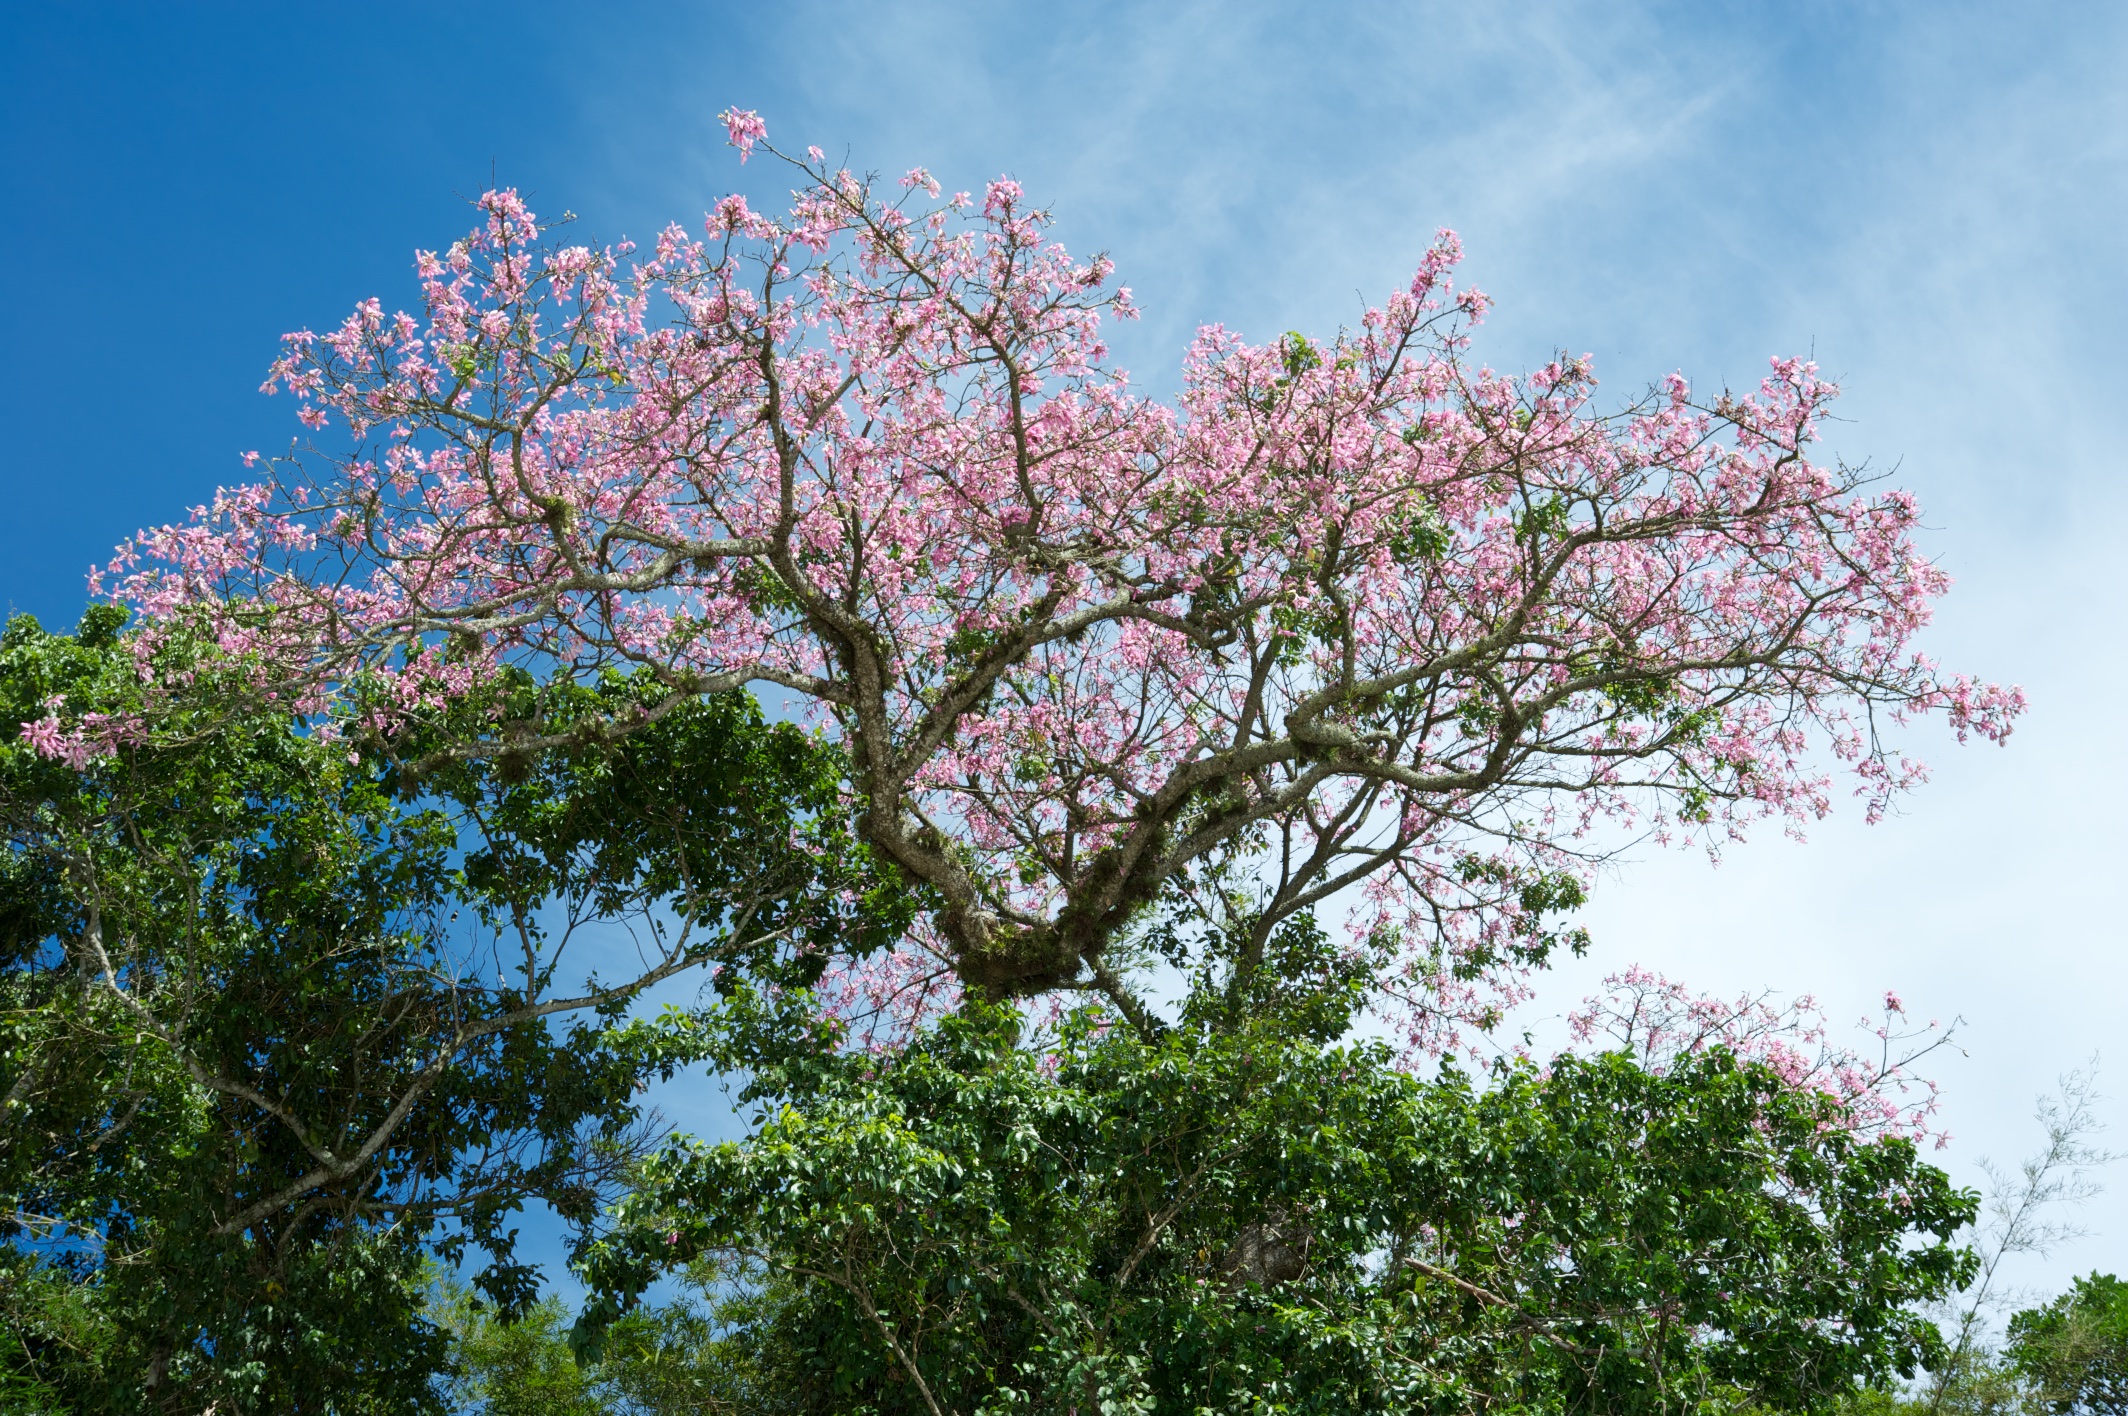  Pink flowering tree, Lopes Mendes, Ilha Grande, Brazil 